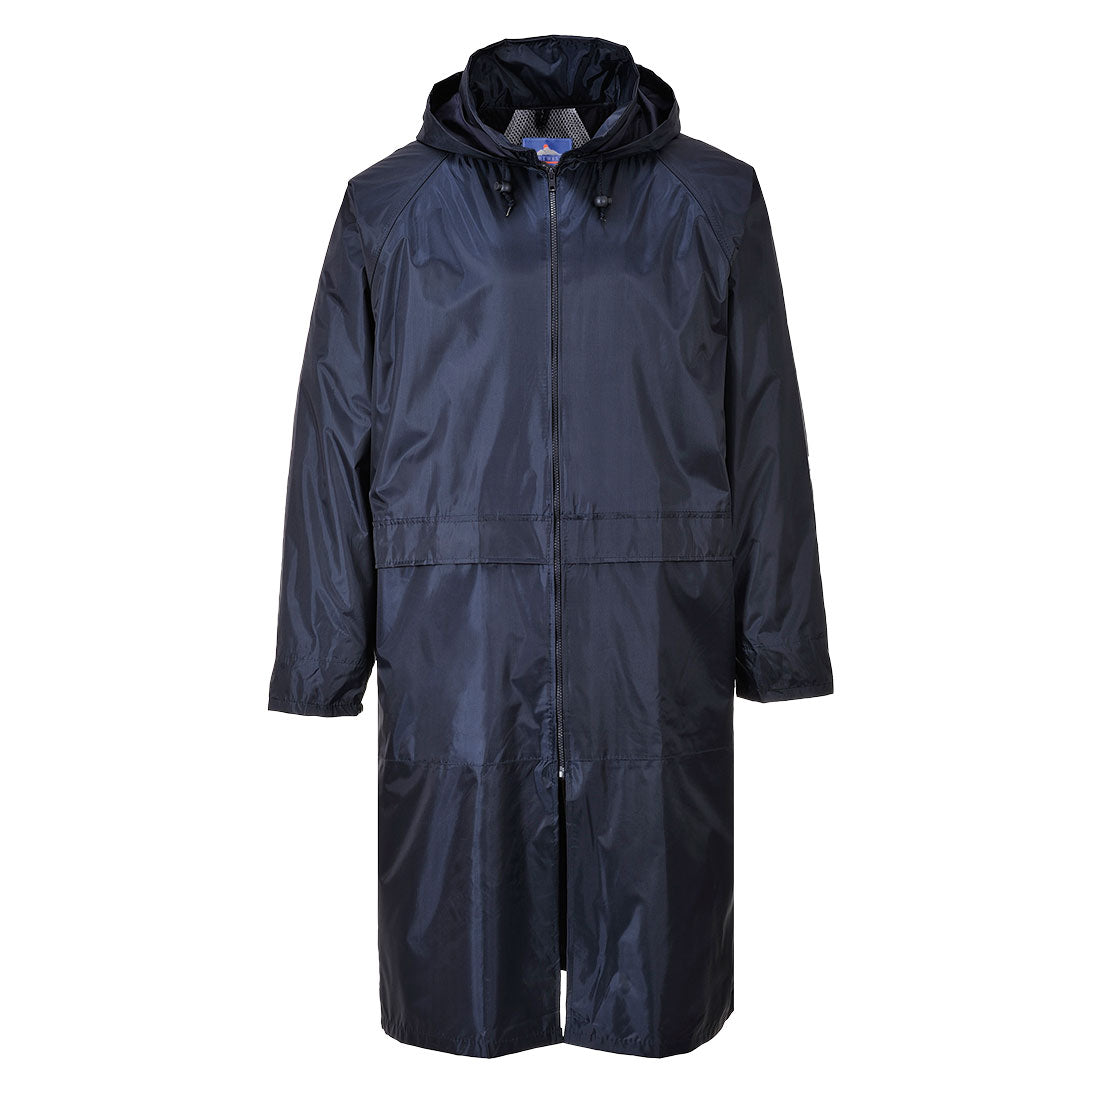 Portwest S438 Classic Rainsuit Coat Long Adult Lightweight Waterproof 5000mm Hood - Hamtons Direct